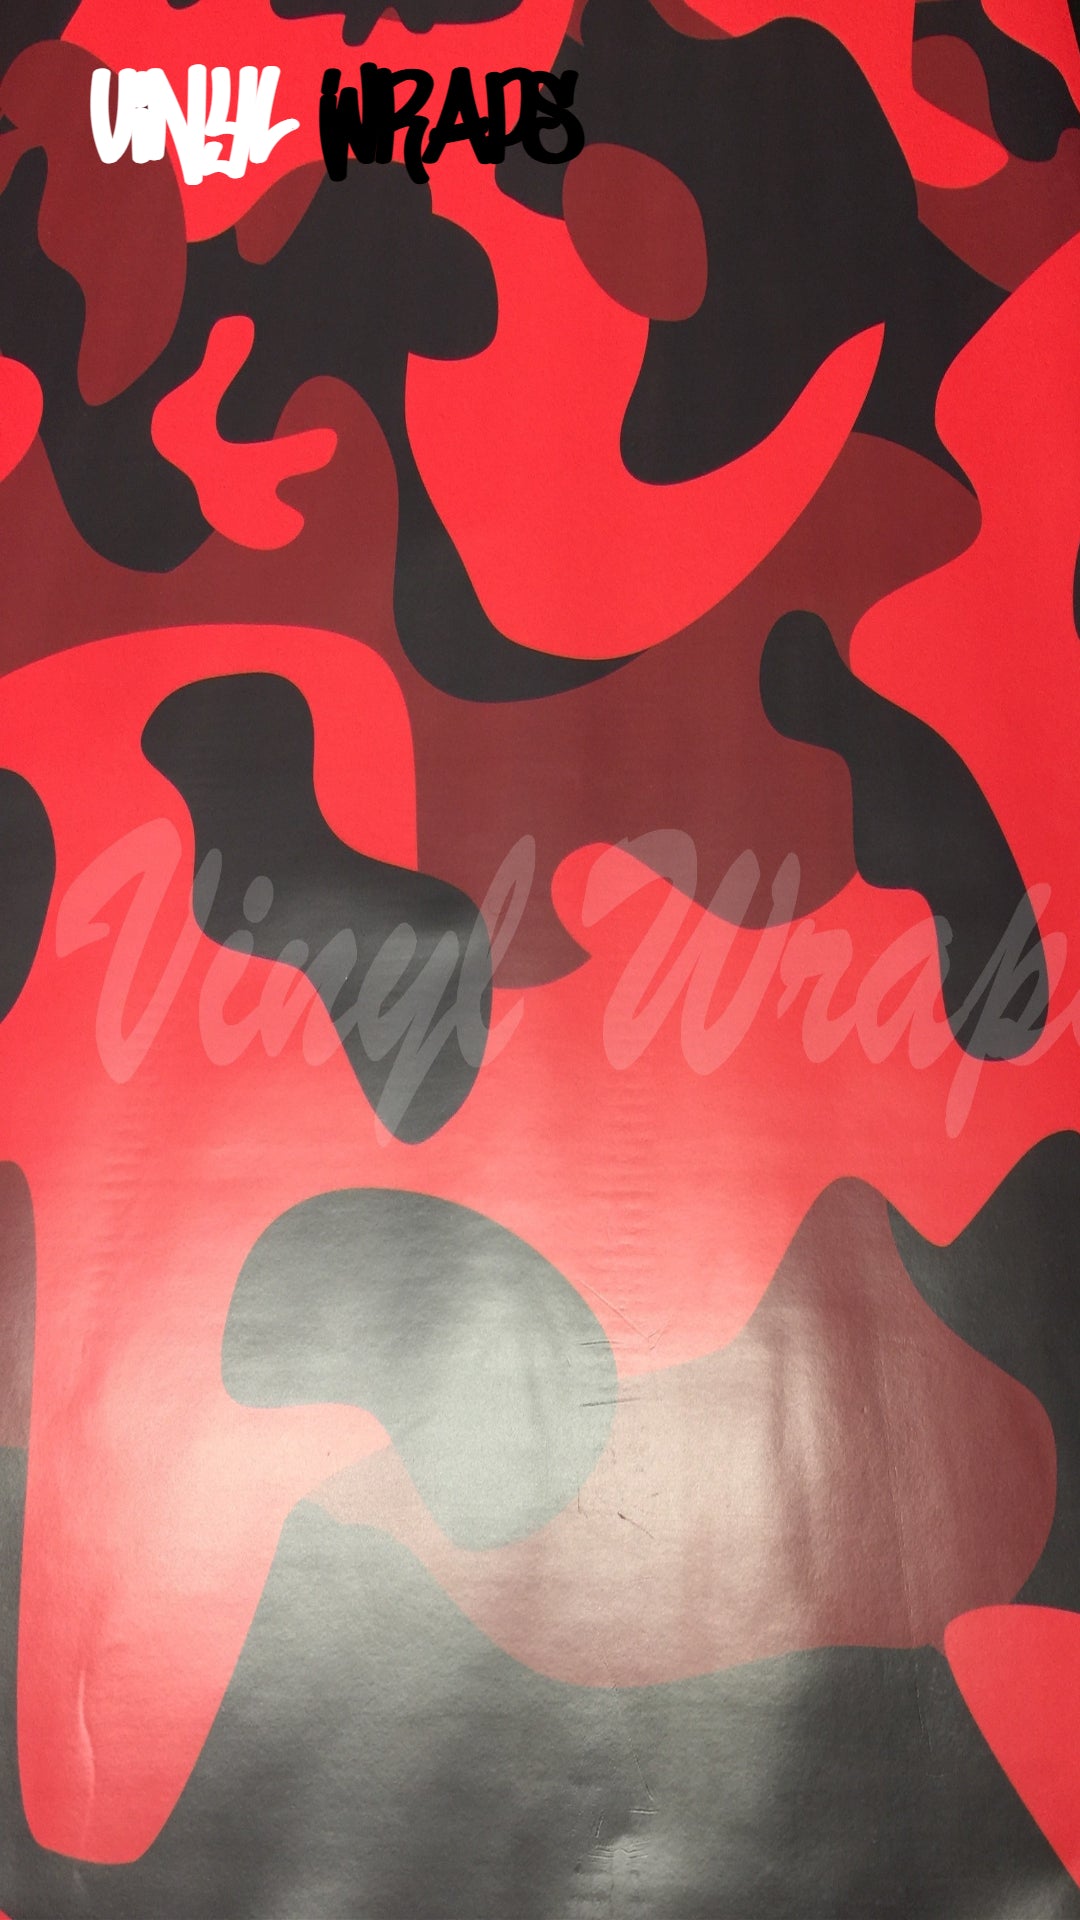 Red, Black and White Camo Vinyl Wrap with ADT - Chromatic Vinyl